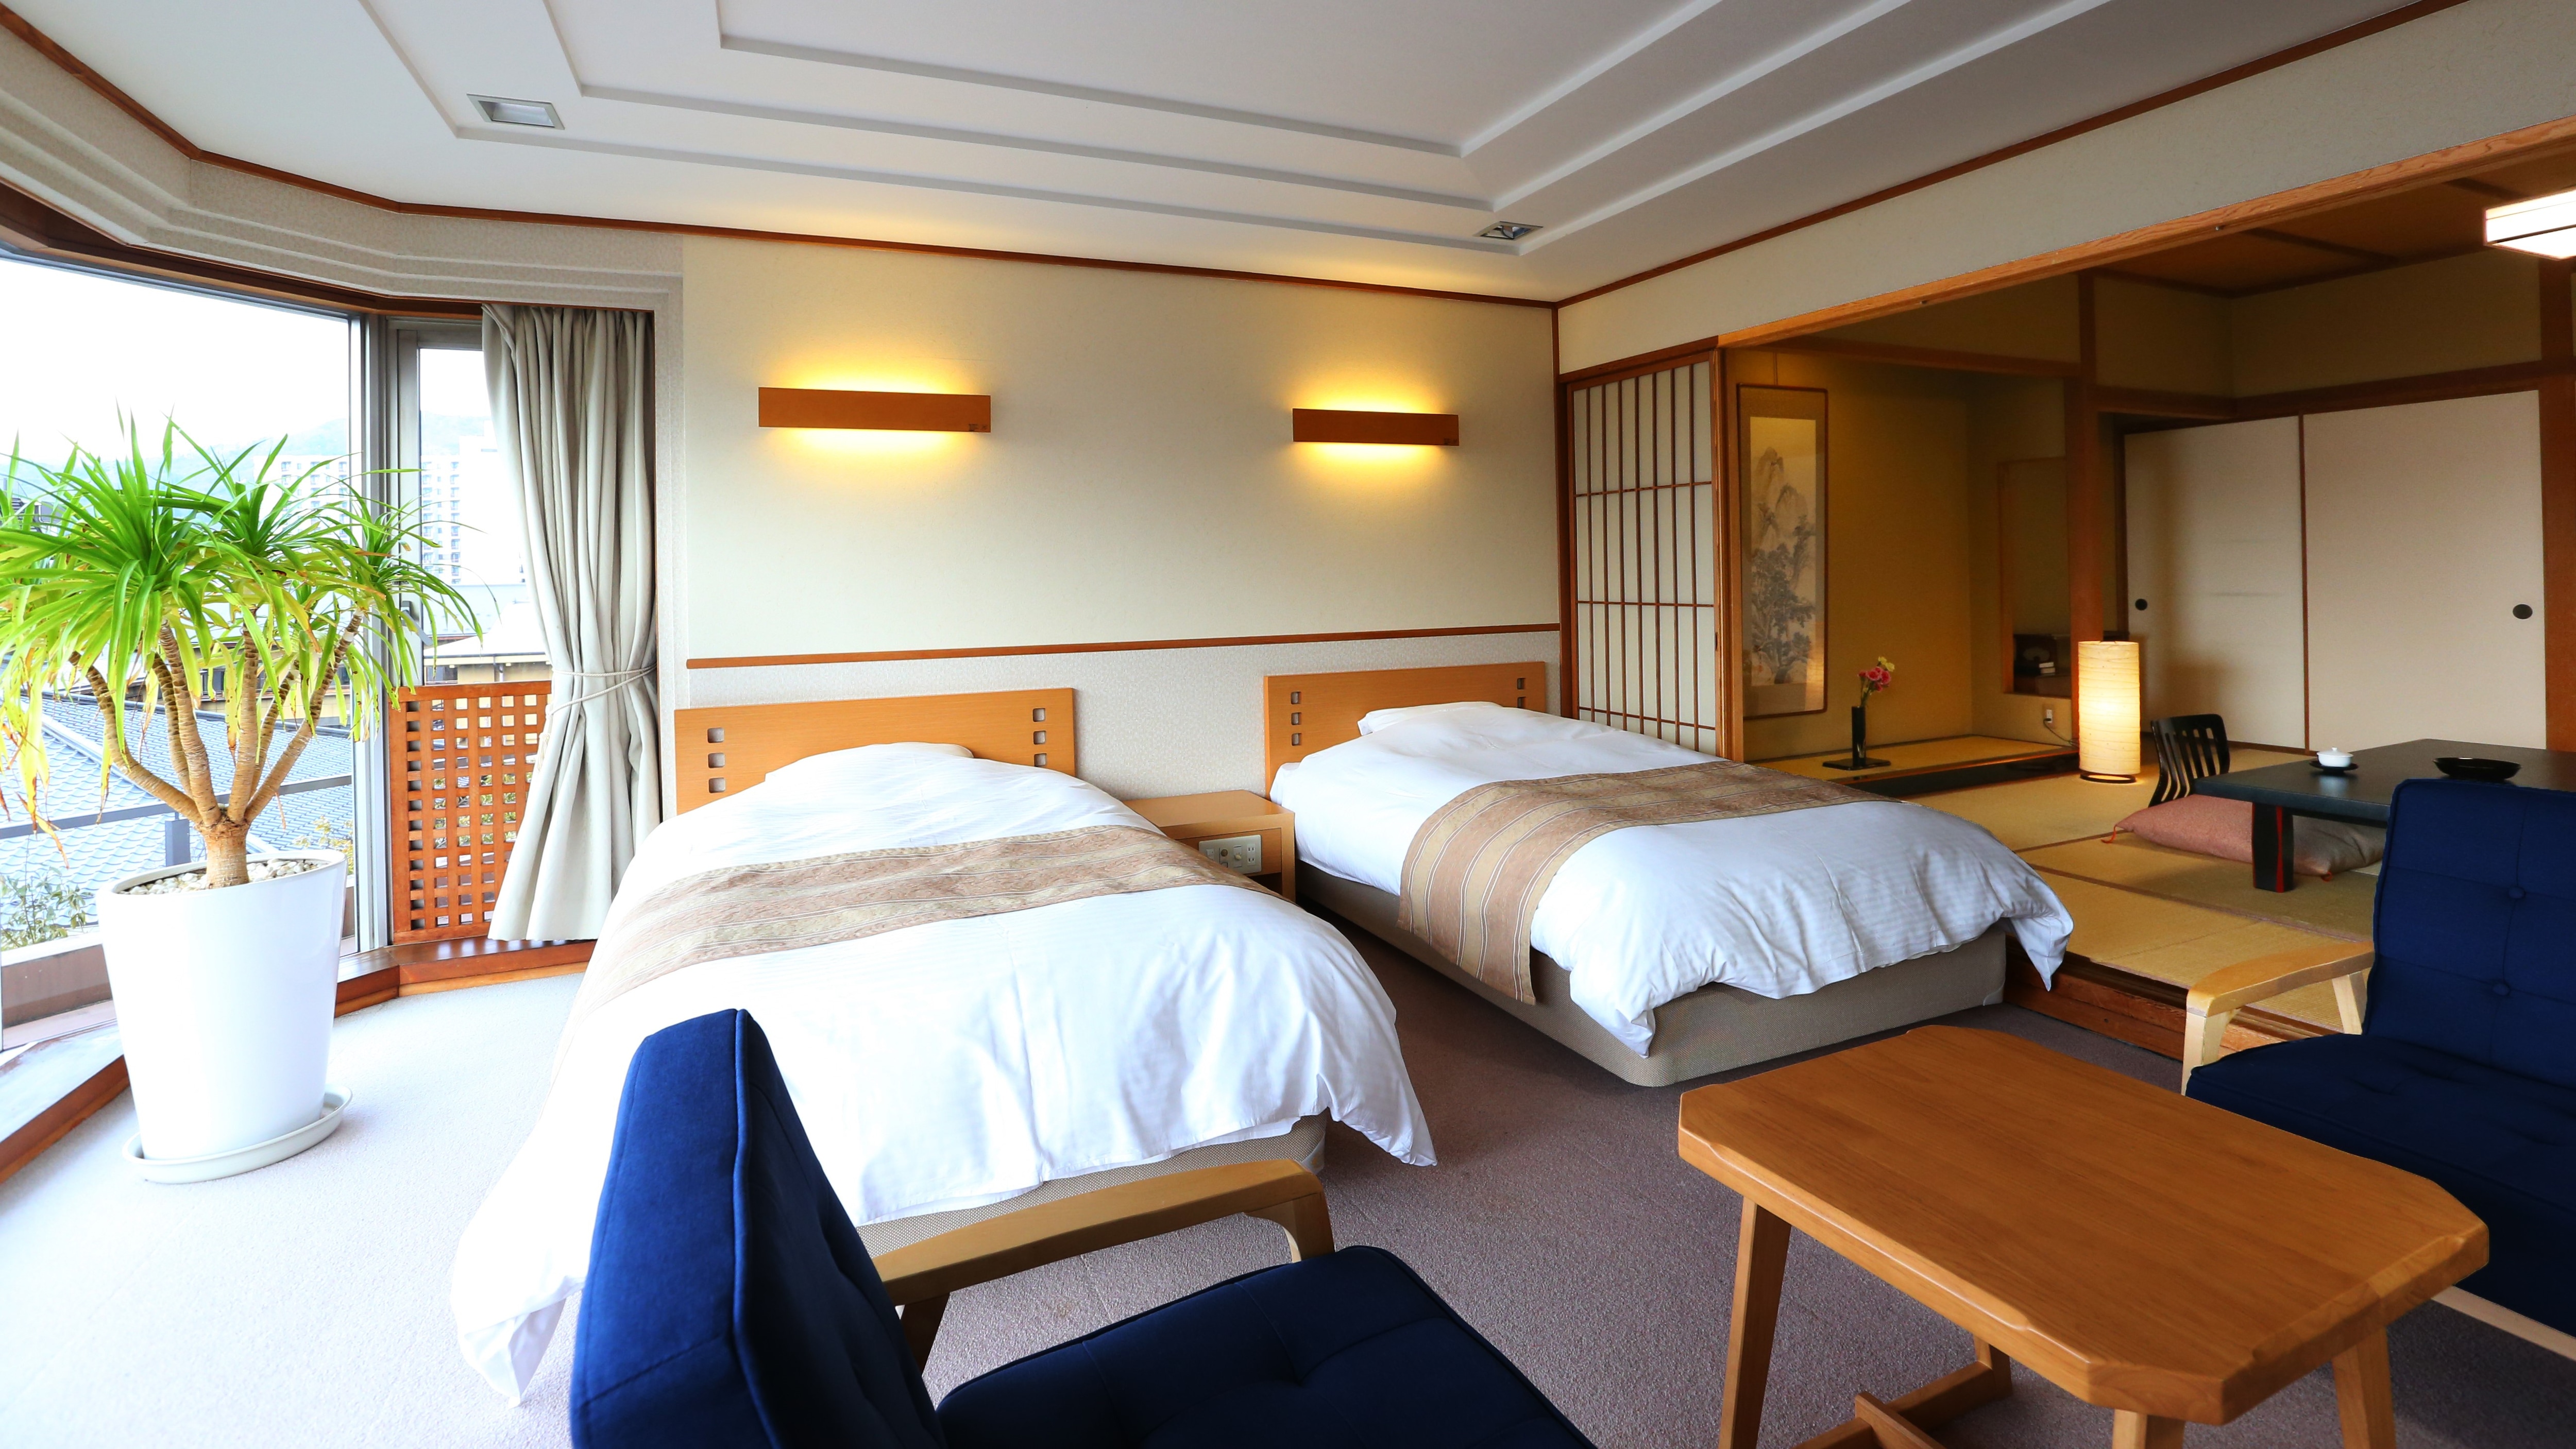 Kamar Jepang dan Barat yang luas [12,5 tikar tatami + 2 tempat tidur] Kamar khusus